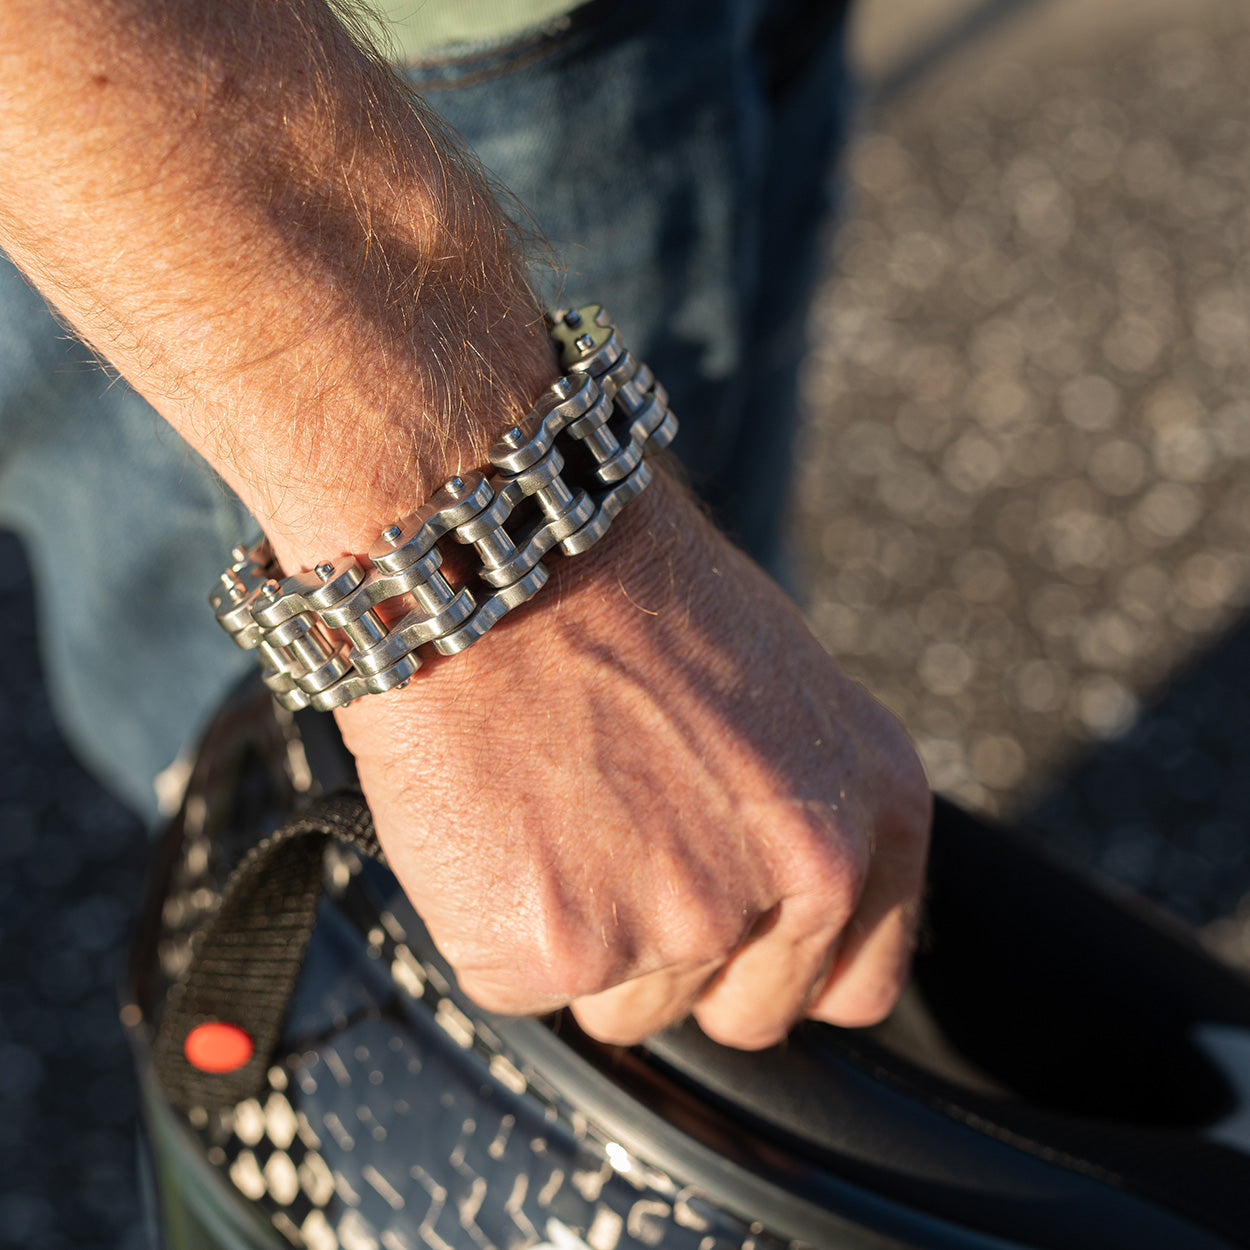 Bracelet chaine moto – Styllen